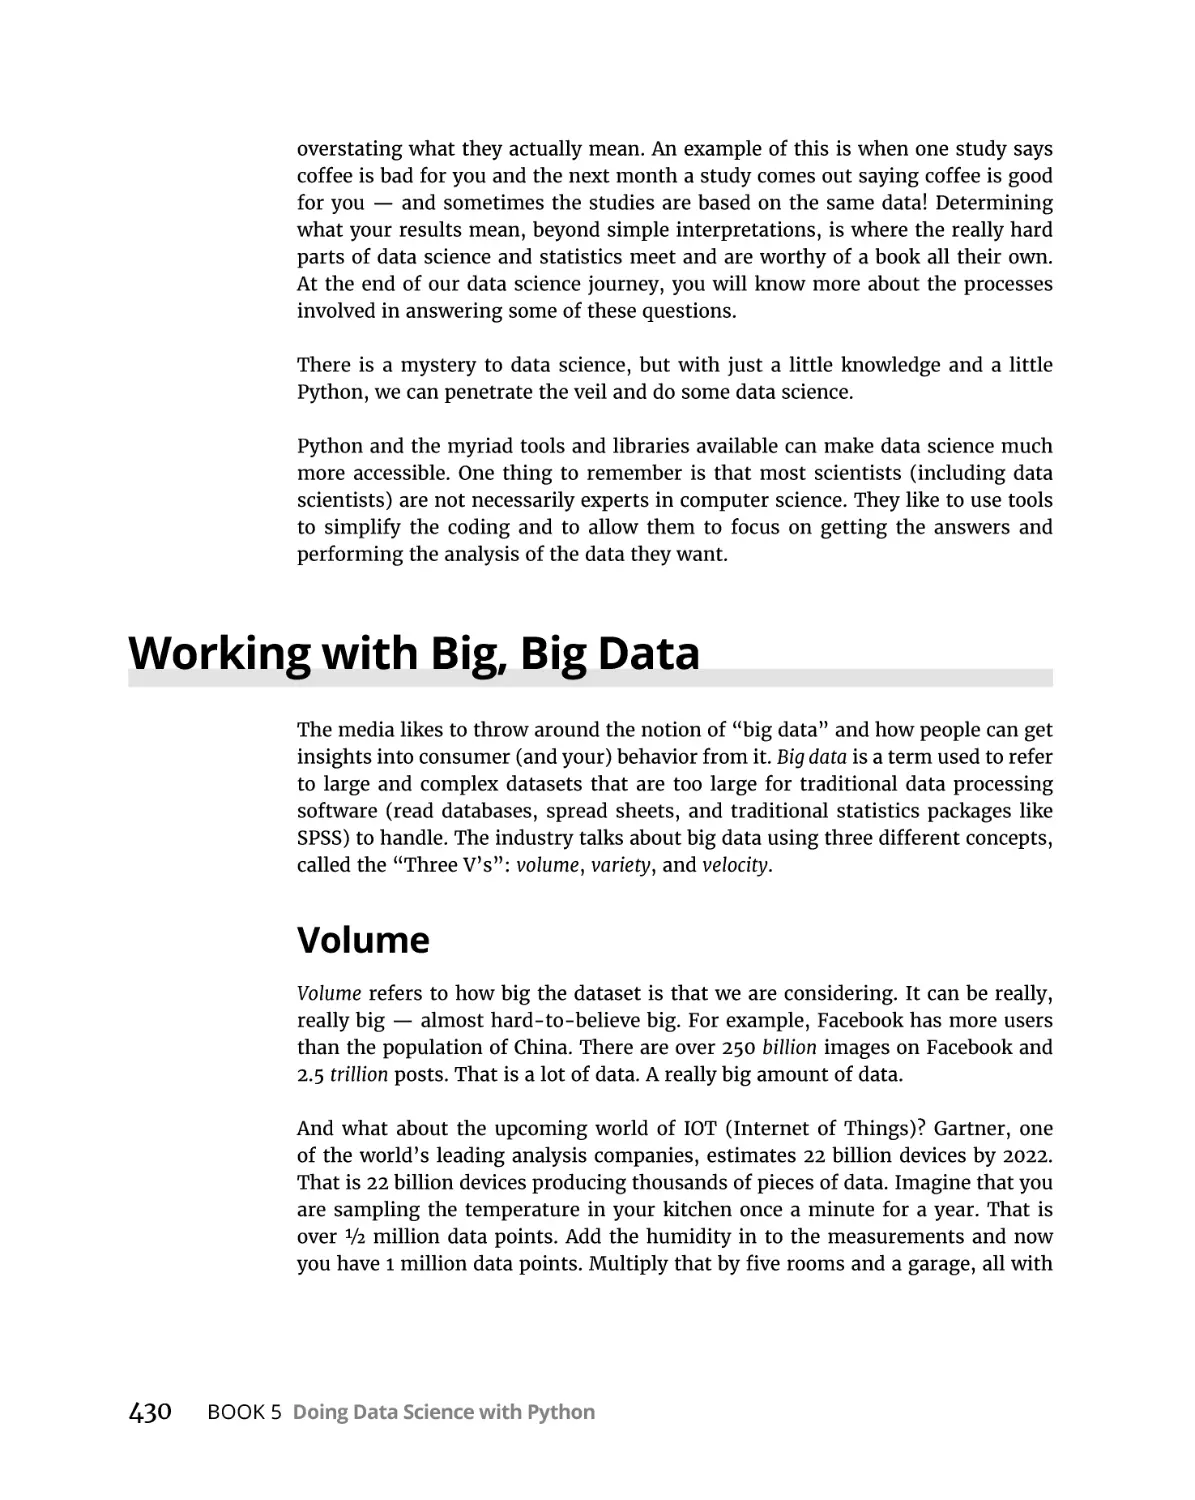 Working with Big, Big Data
Volume